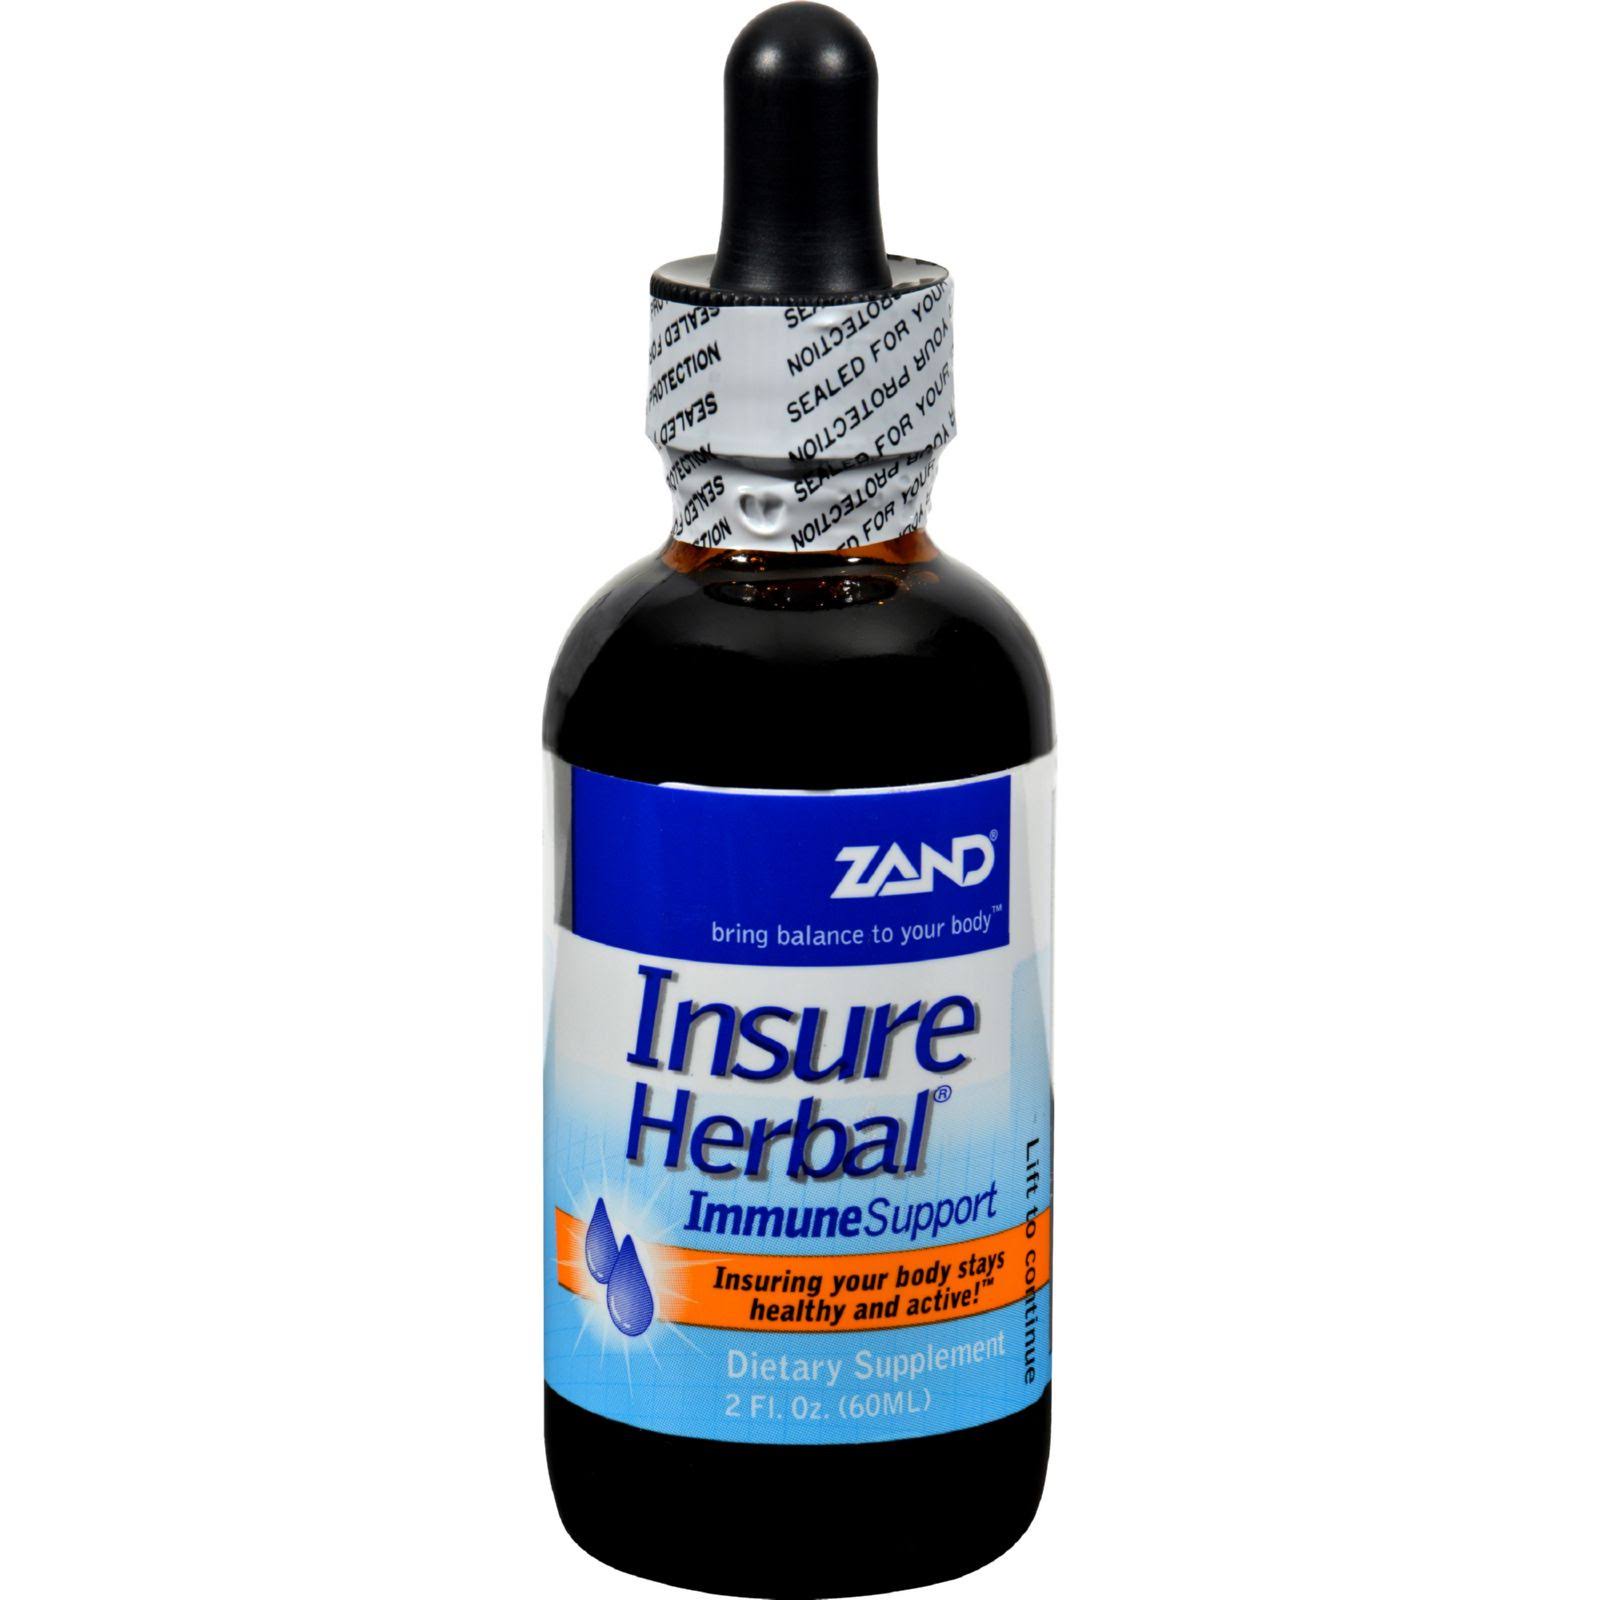 Zand Insure Herbal Immune Support - 2oz